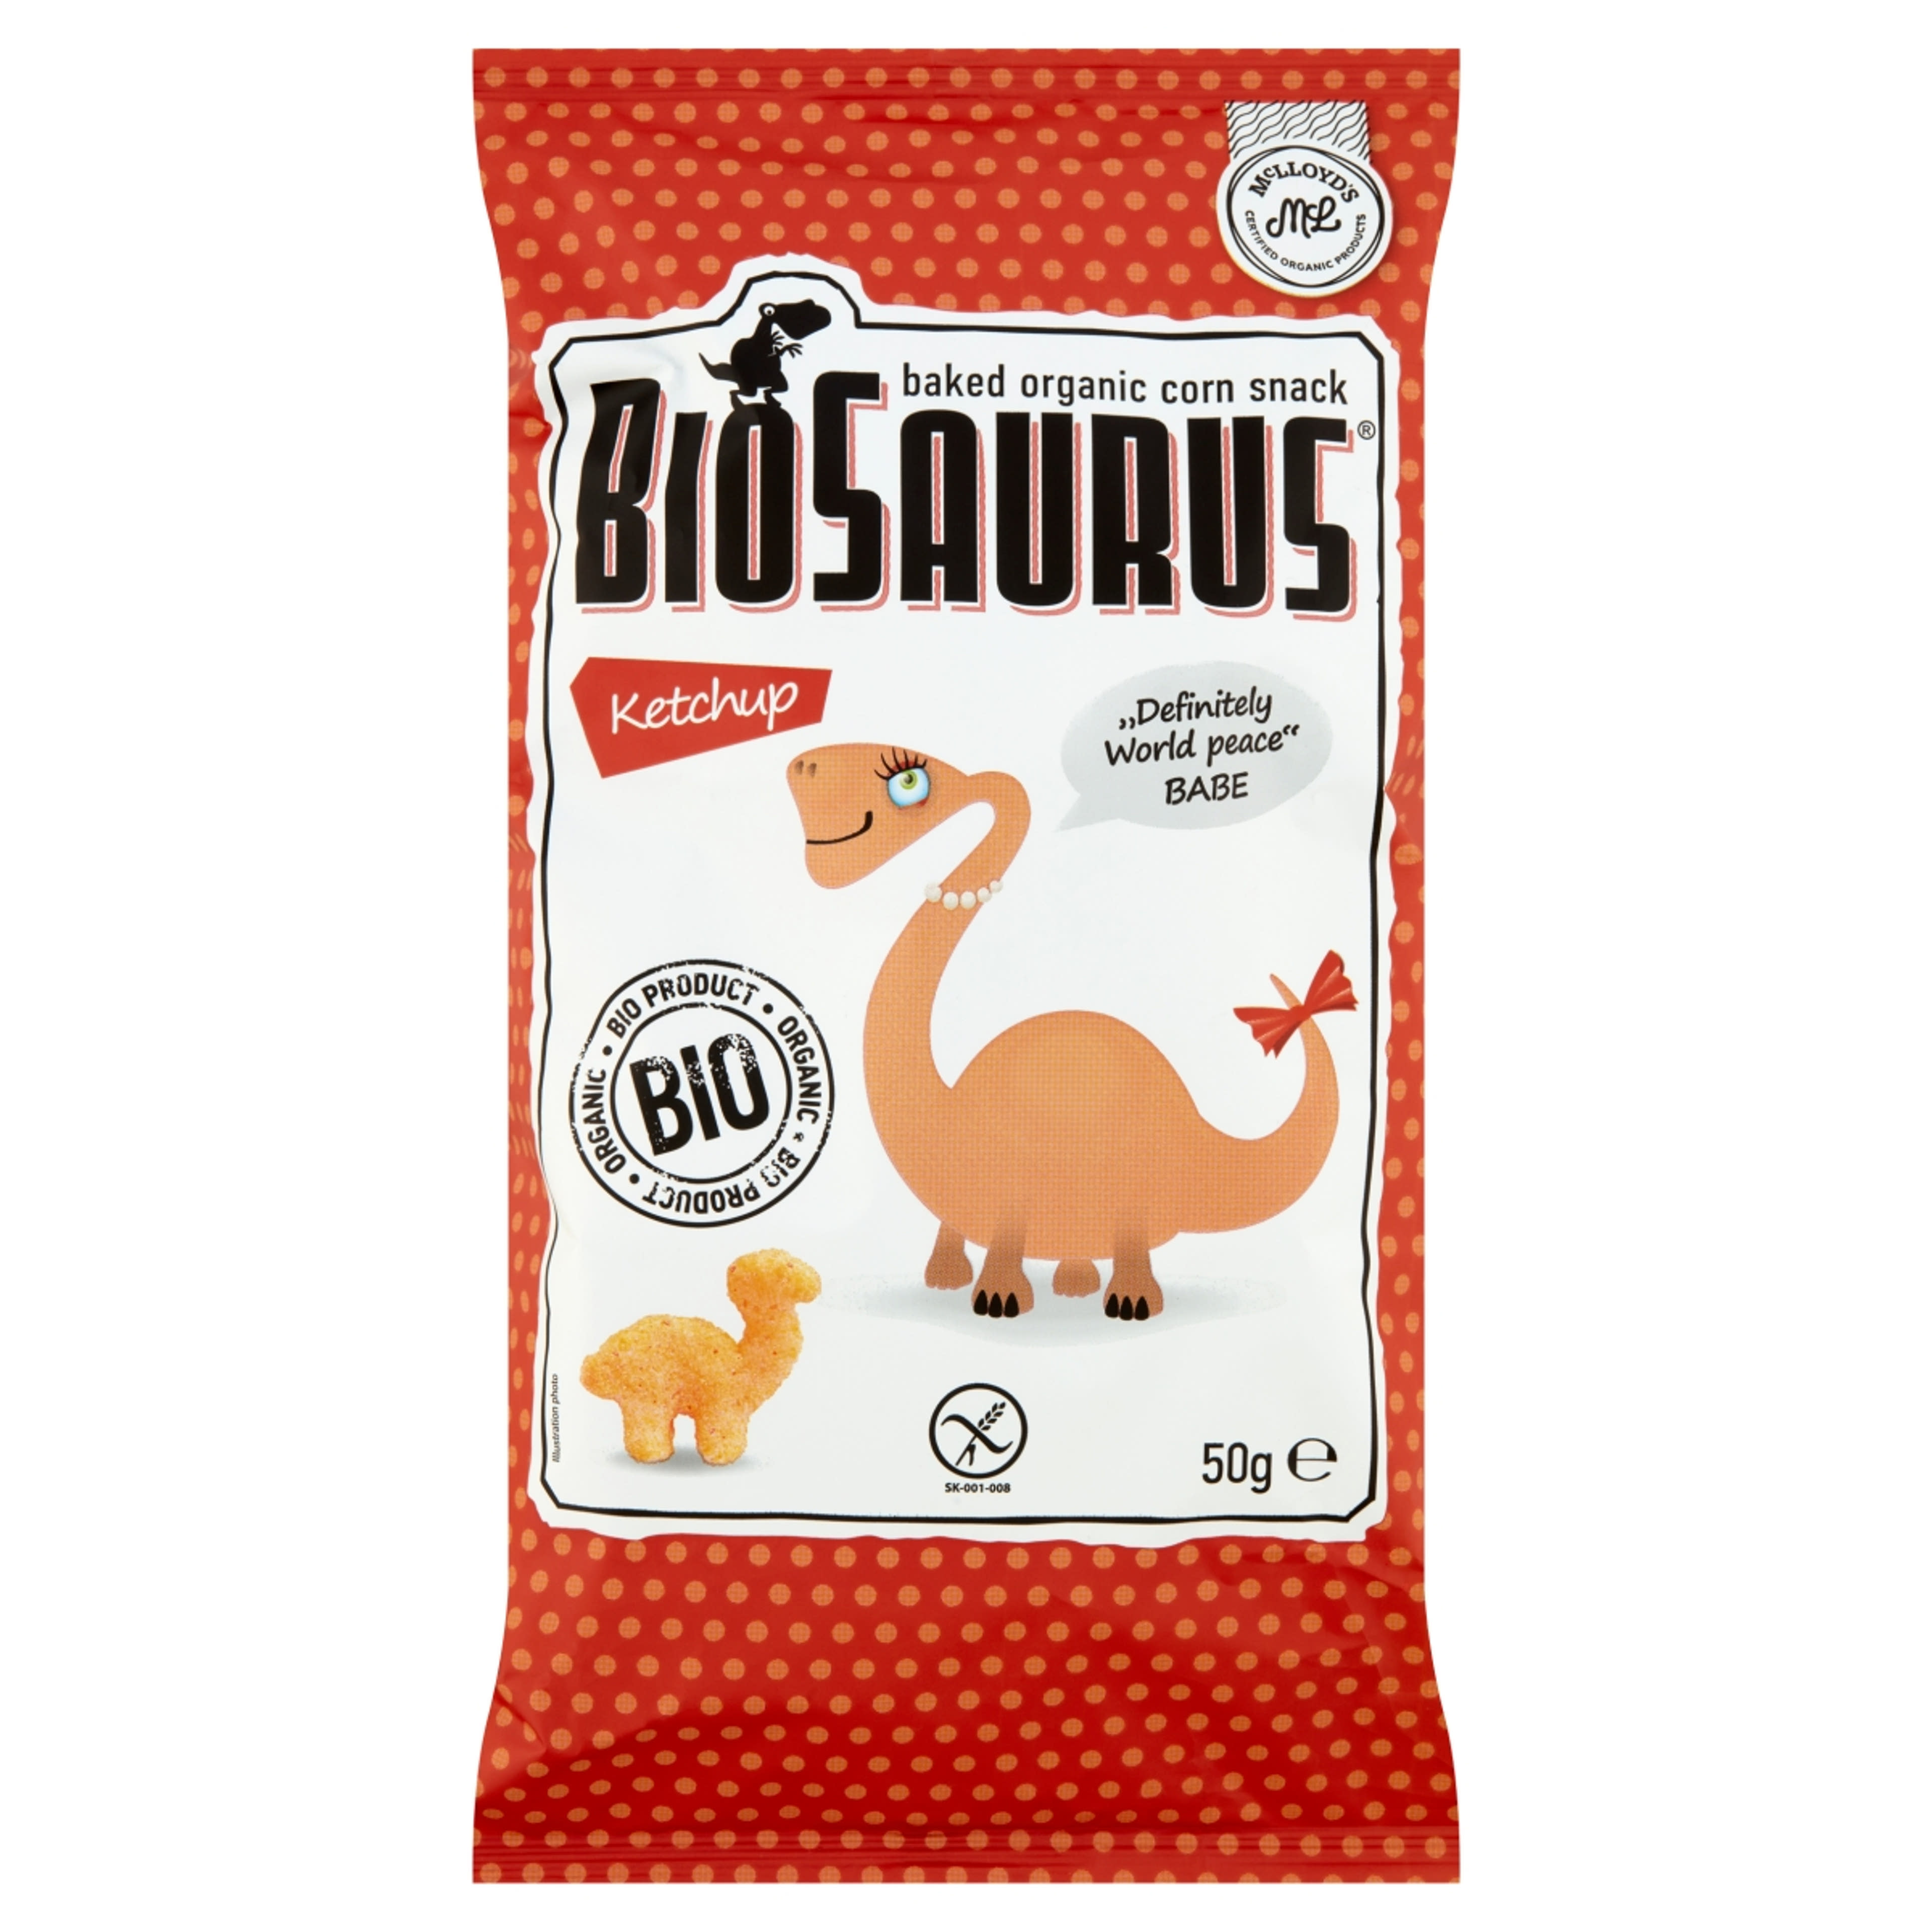 Biopont Biosaurus ketchupos ízű sült kukoricás snack - 50 g-1